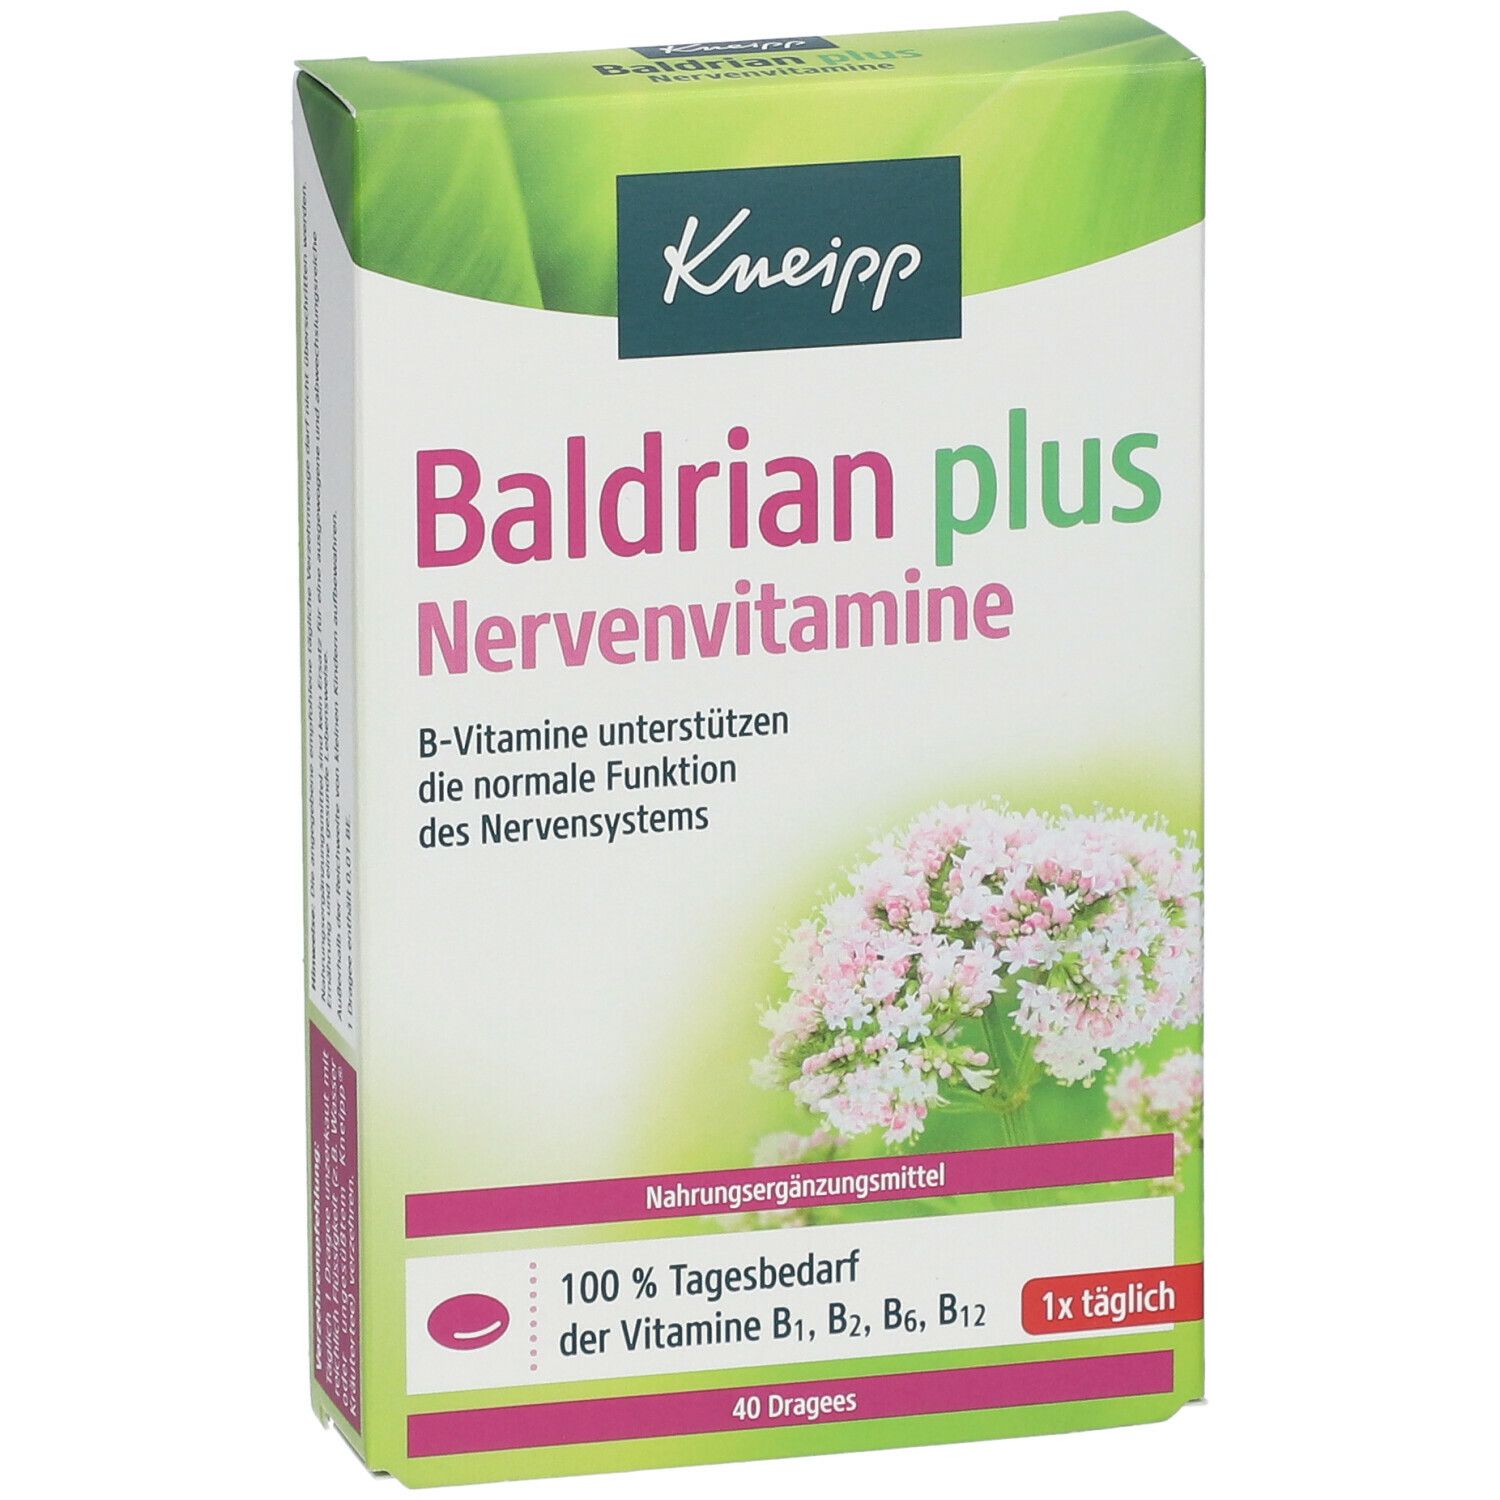 Kneipp® Baldrian plus Nervenvitamine